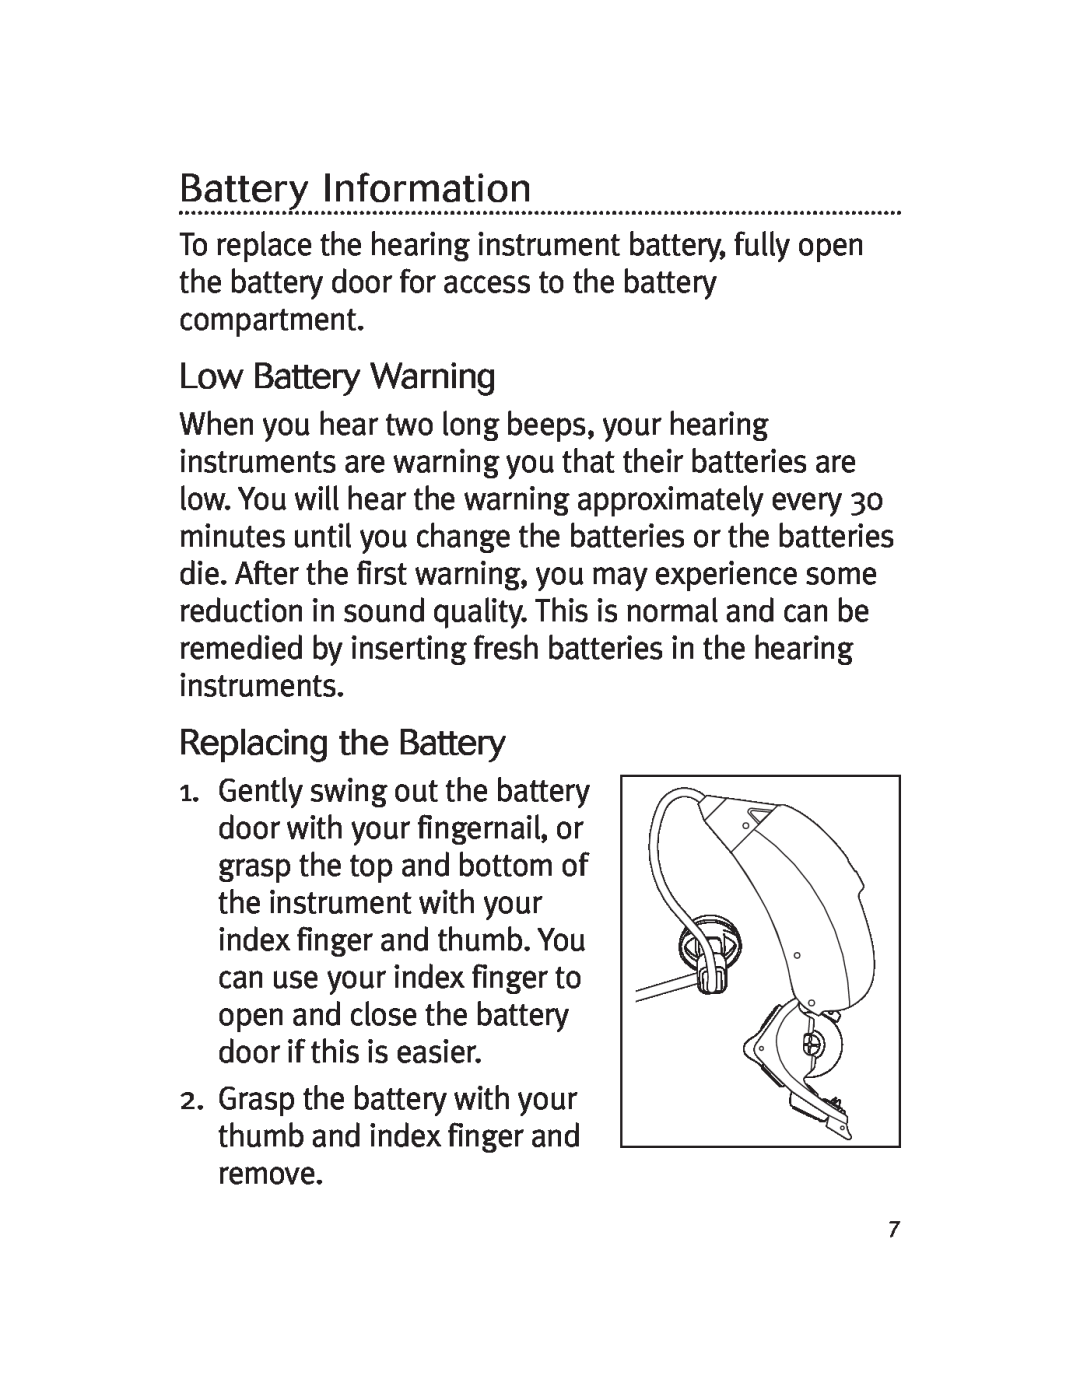 Unitron Hearing Aid Moda 13, Moxi 13 manual Battery Information, Low Battery Warning, Replacing the Battery 